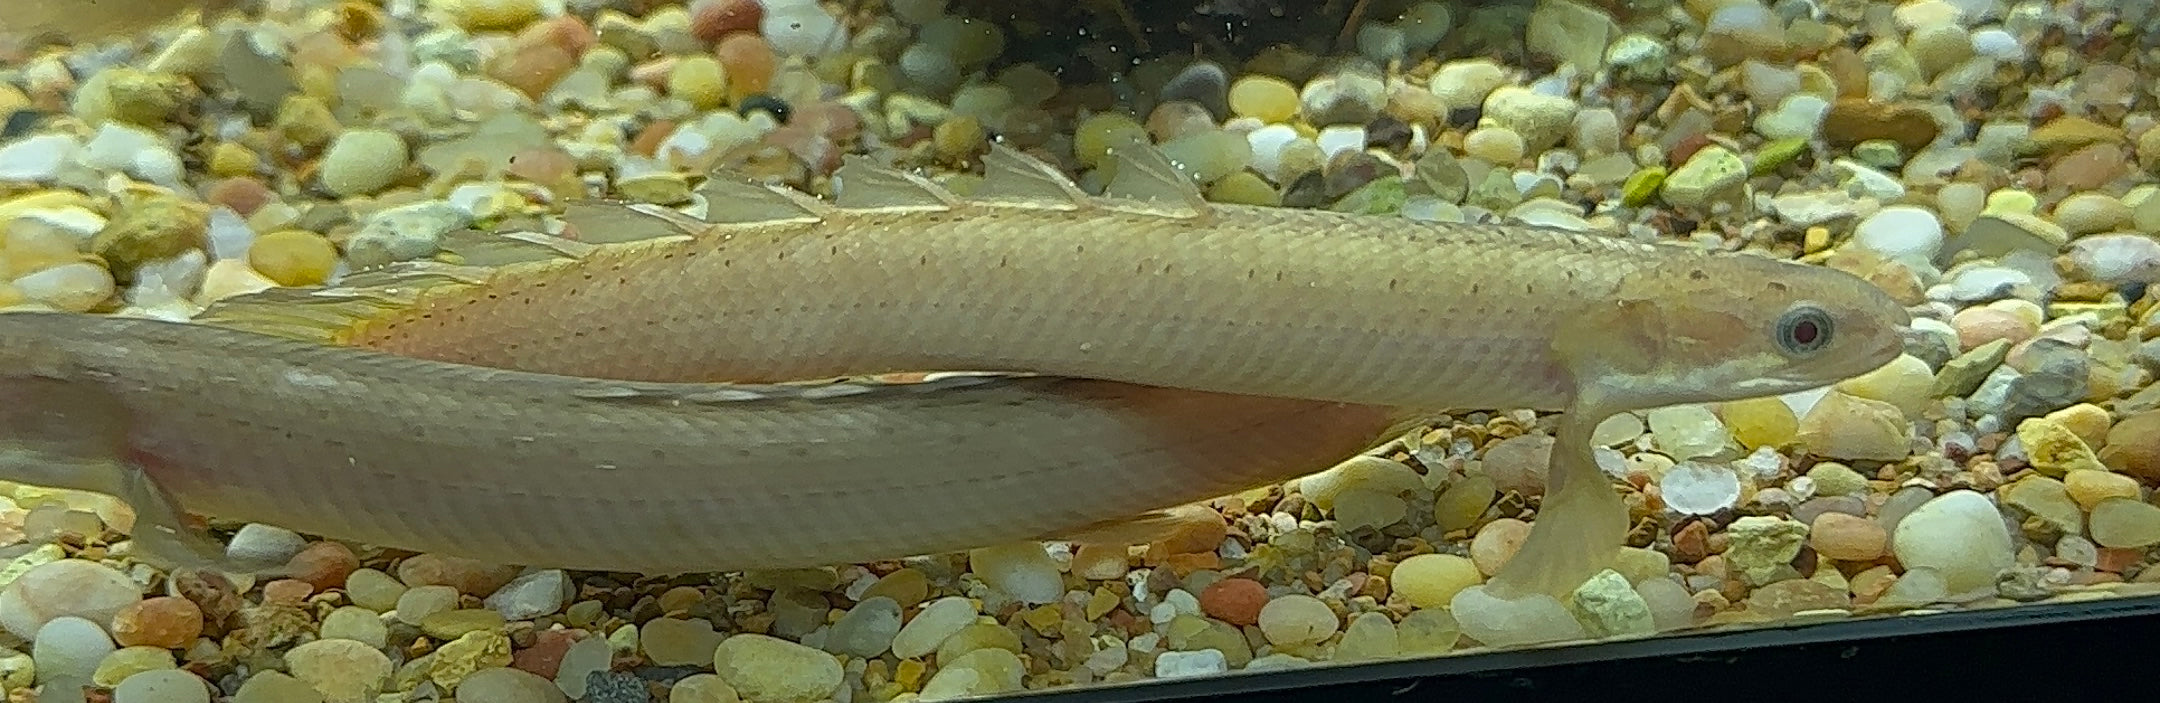 Gold Senegal Polypterus (5-5.5”)